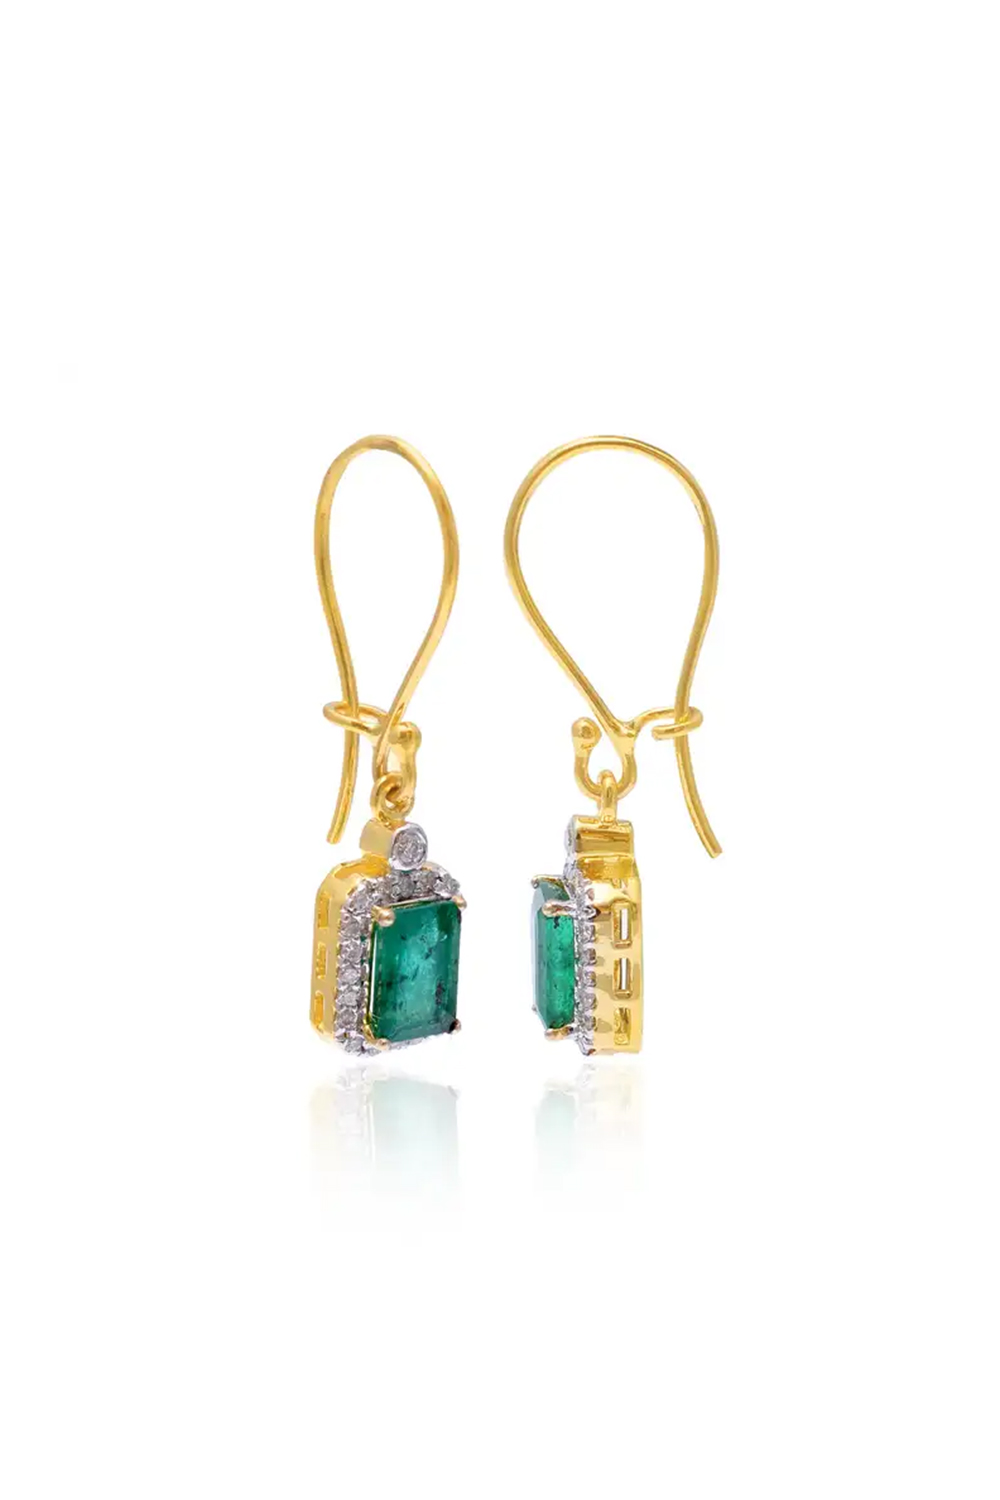 Emerald Dangle Earrings with Diamond in 14k Gold